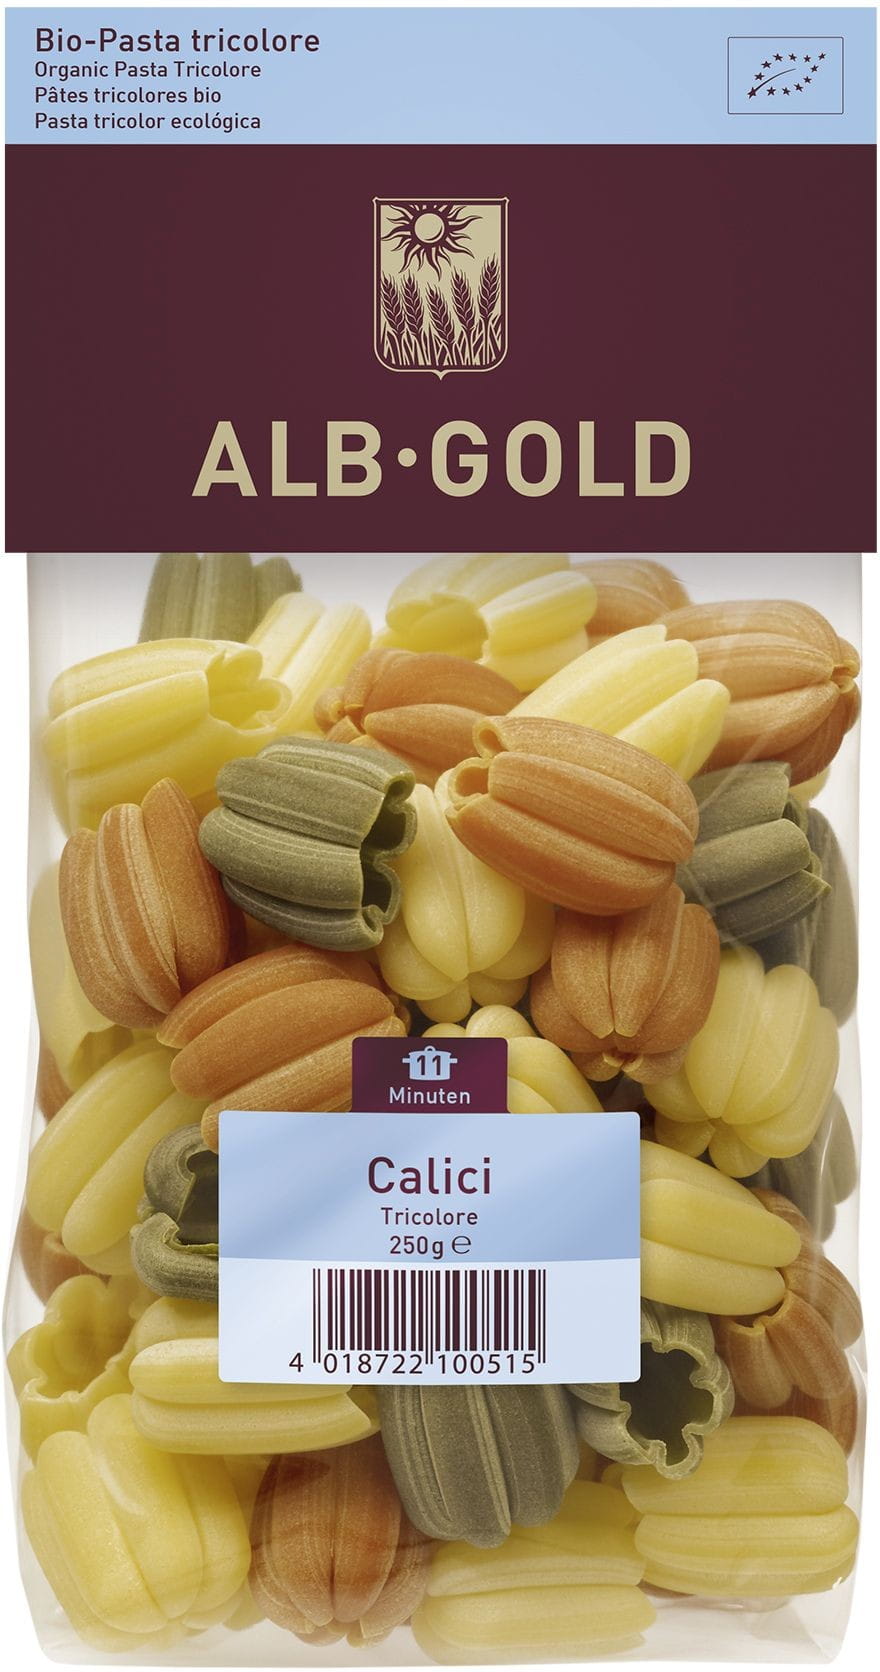 Pâtes (semoule tricolore) calici (tulipe) BIO 250 g - ALB GOLD